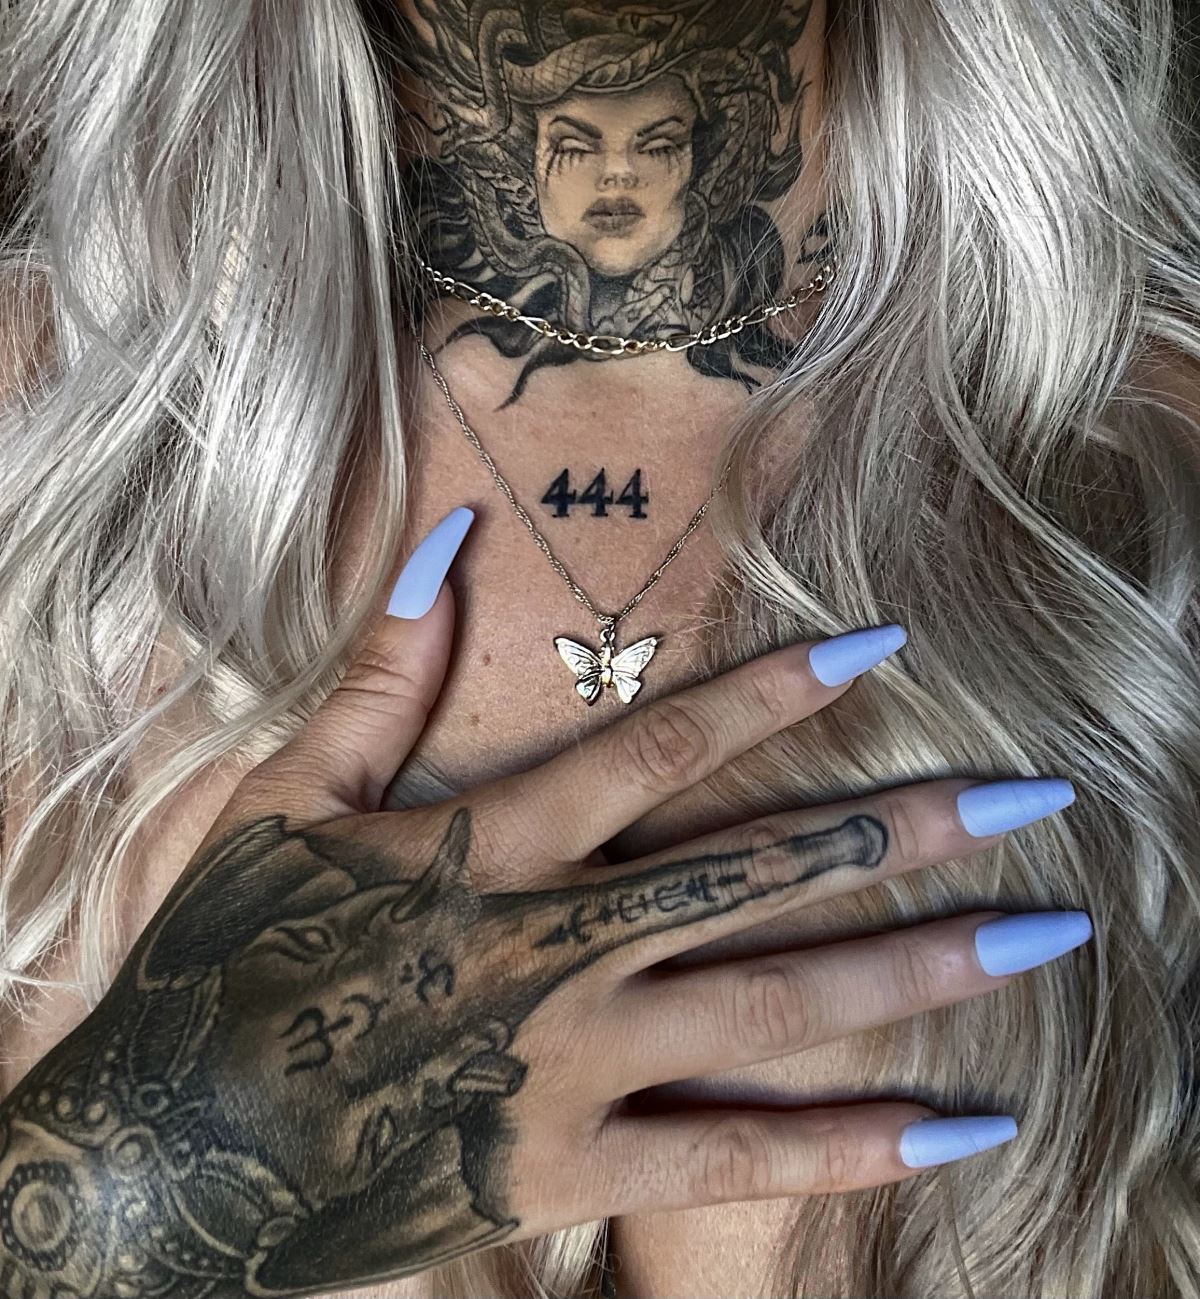 9 celebrity tattoo artists you should follow on Instagram